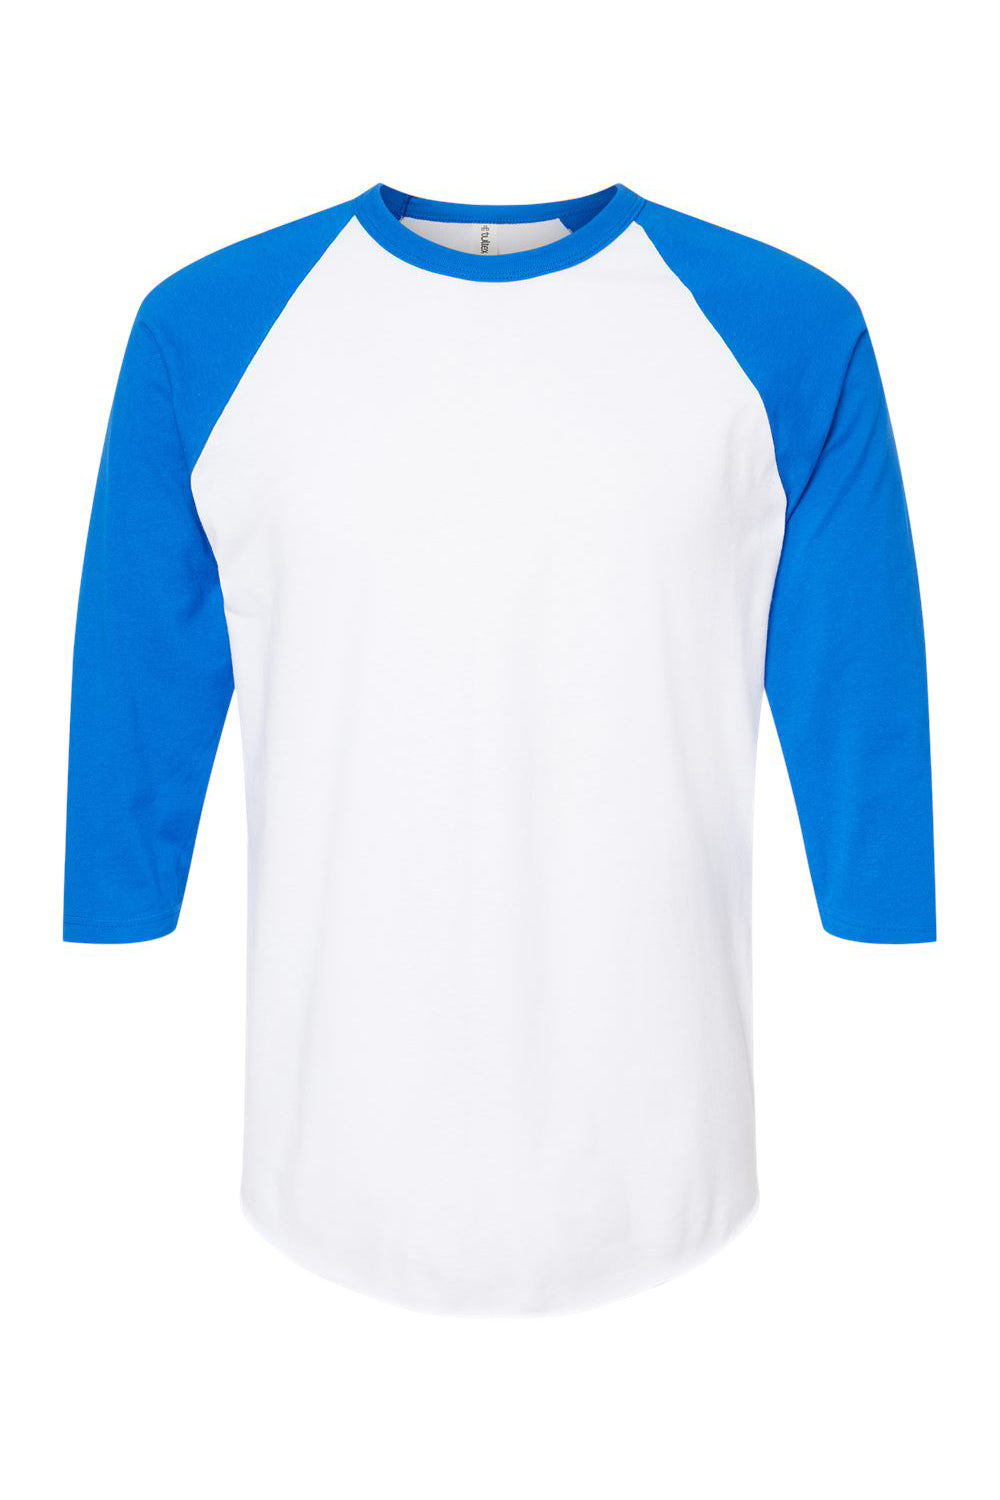 Tultex 245 Mens Fine Jersey Raglan 3/4 Sleeve Crewneck T-Shirt White/Royal Blue Flat Front